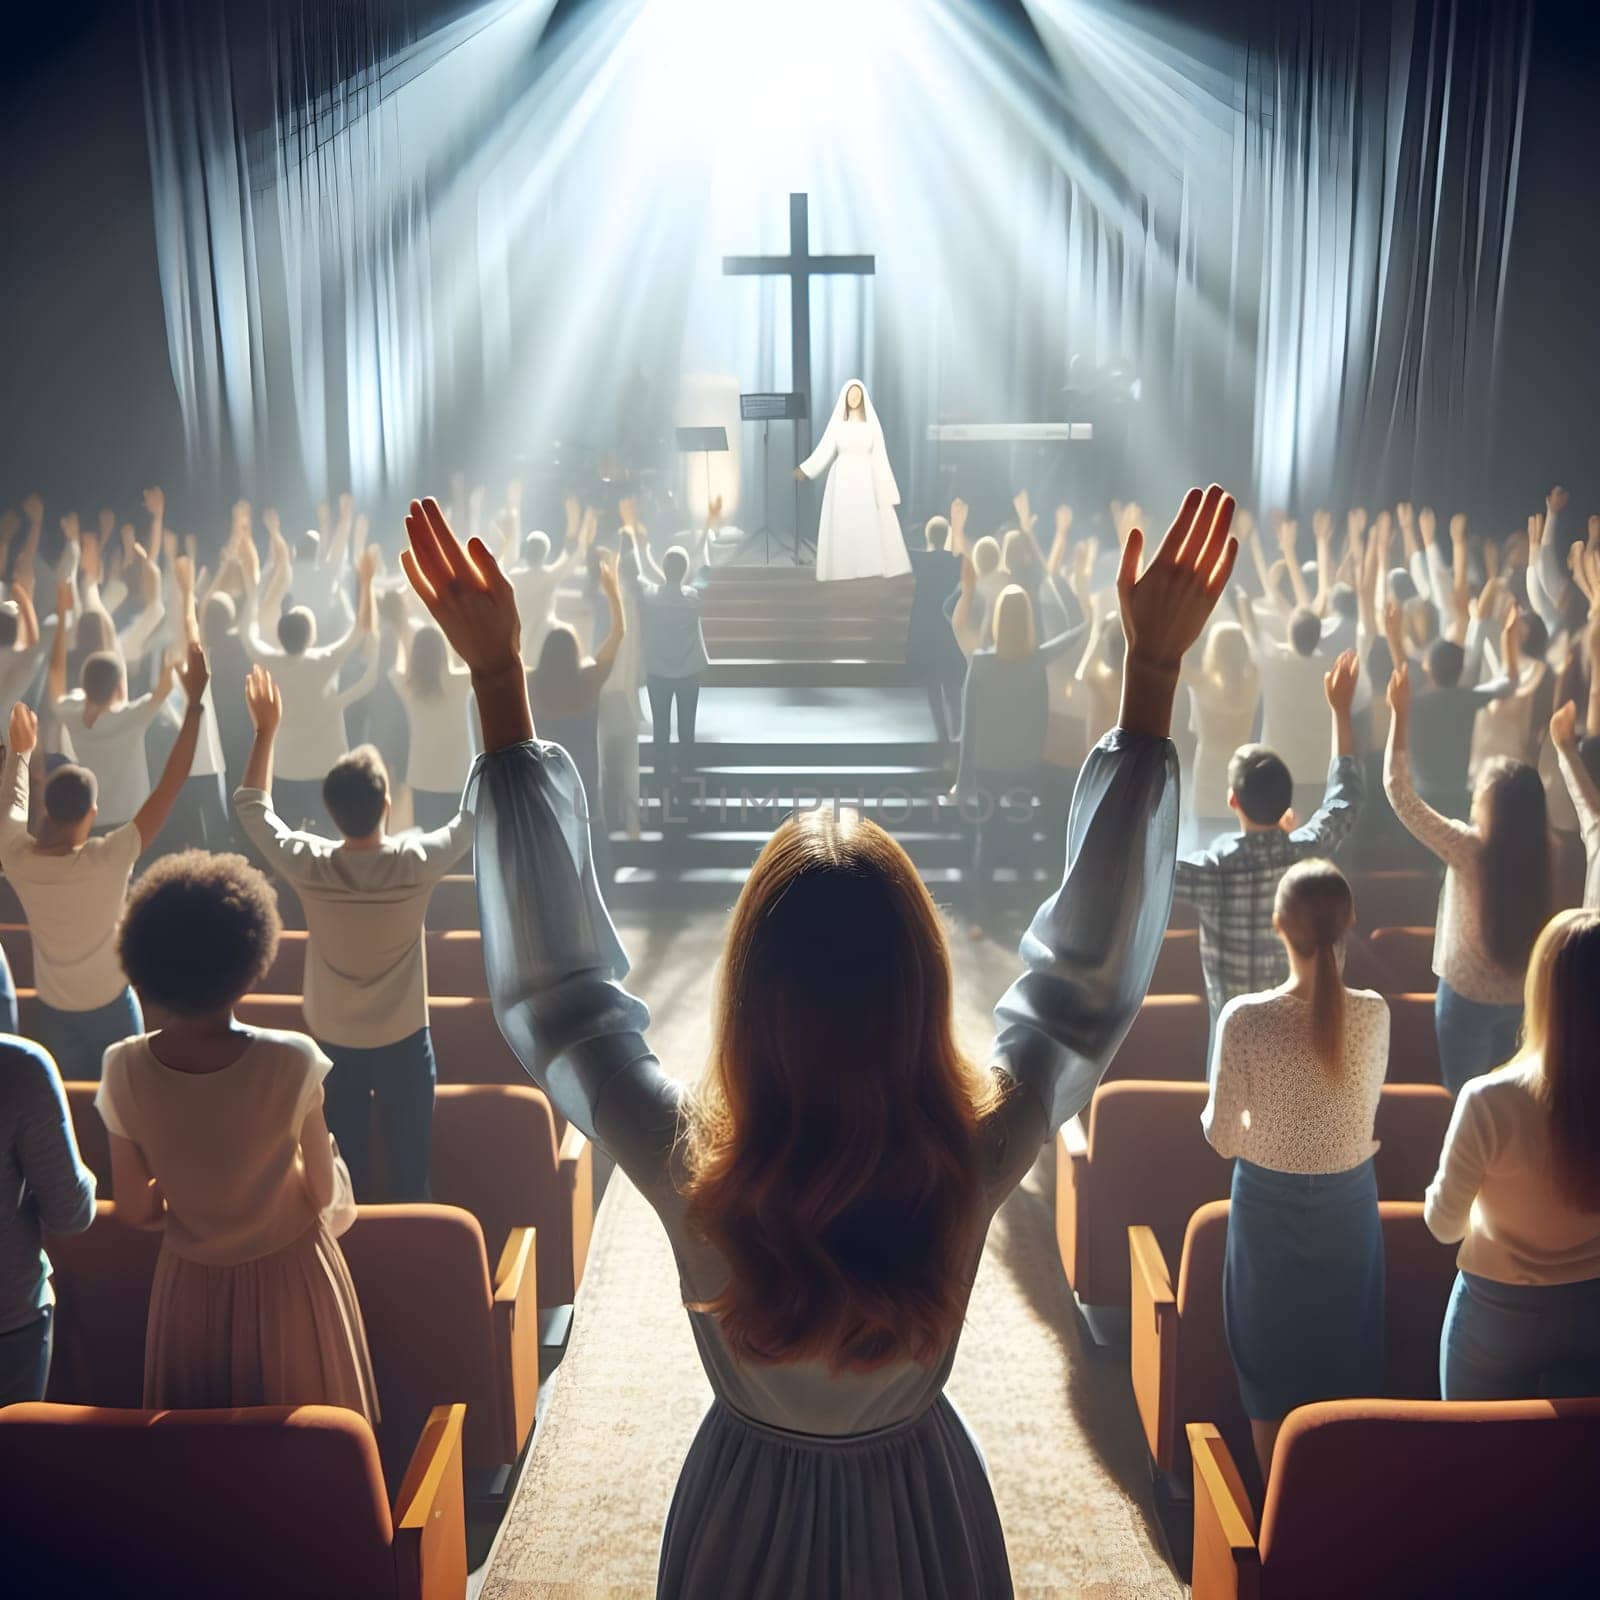 girl worships god, raising her hands up. by andre_dechapelle